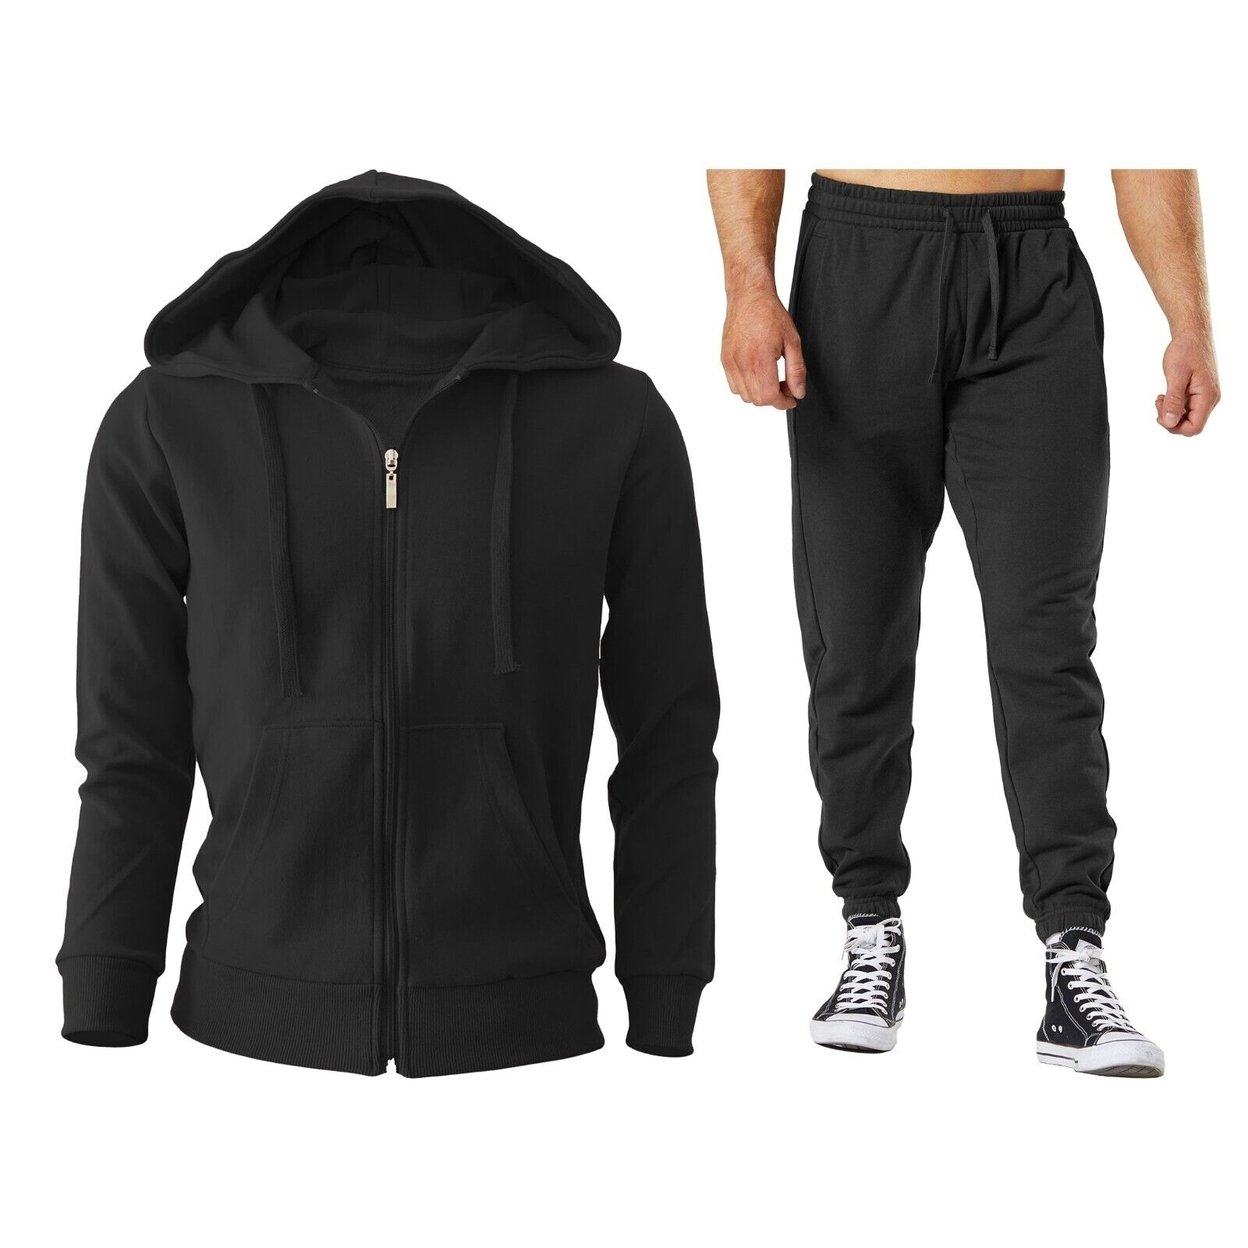 2/4-Piece: Men's Winter Warm Cozy Athletic Multi-Pockets BIG & TALL Sweatsuit Set - Black, 1, 3xl